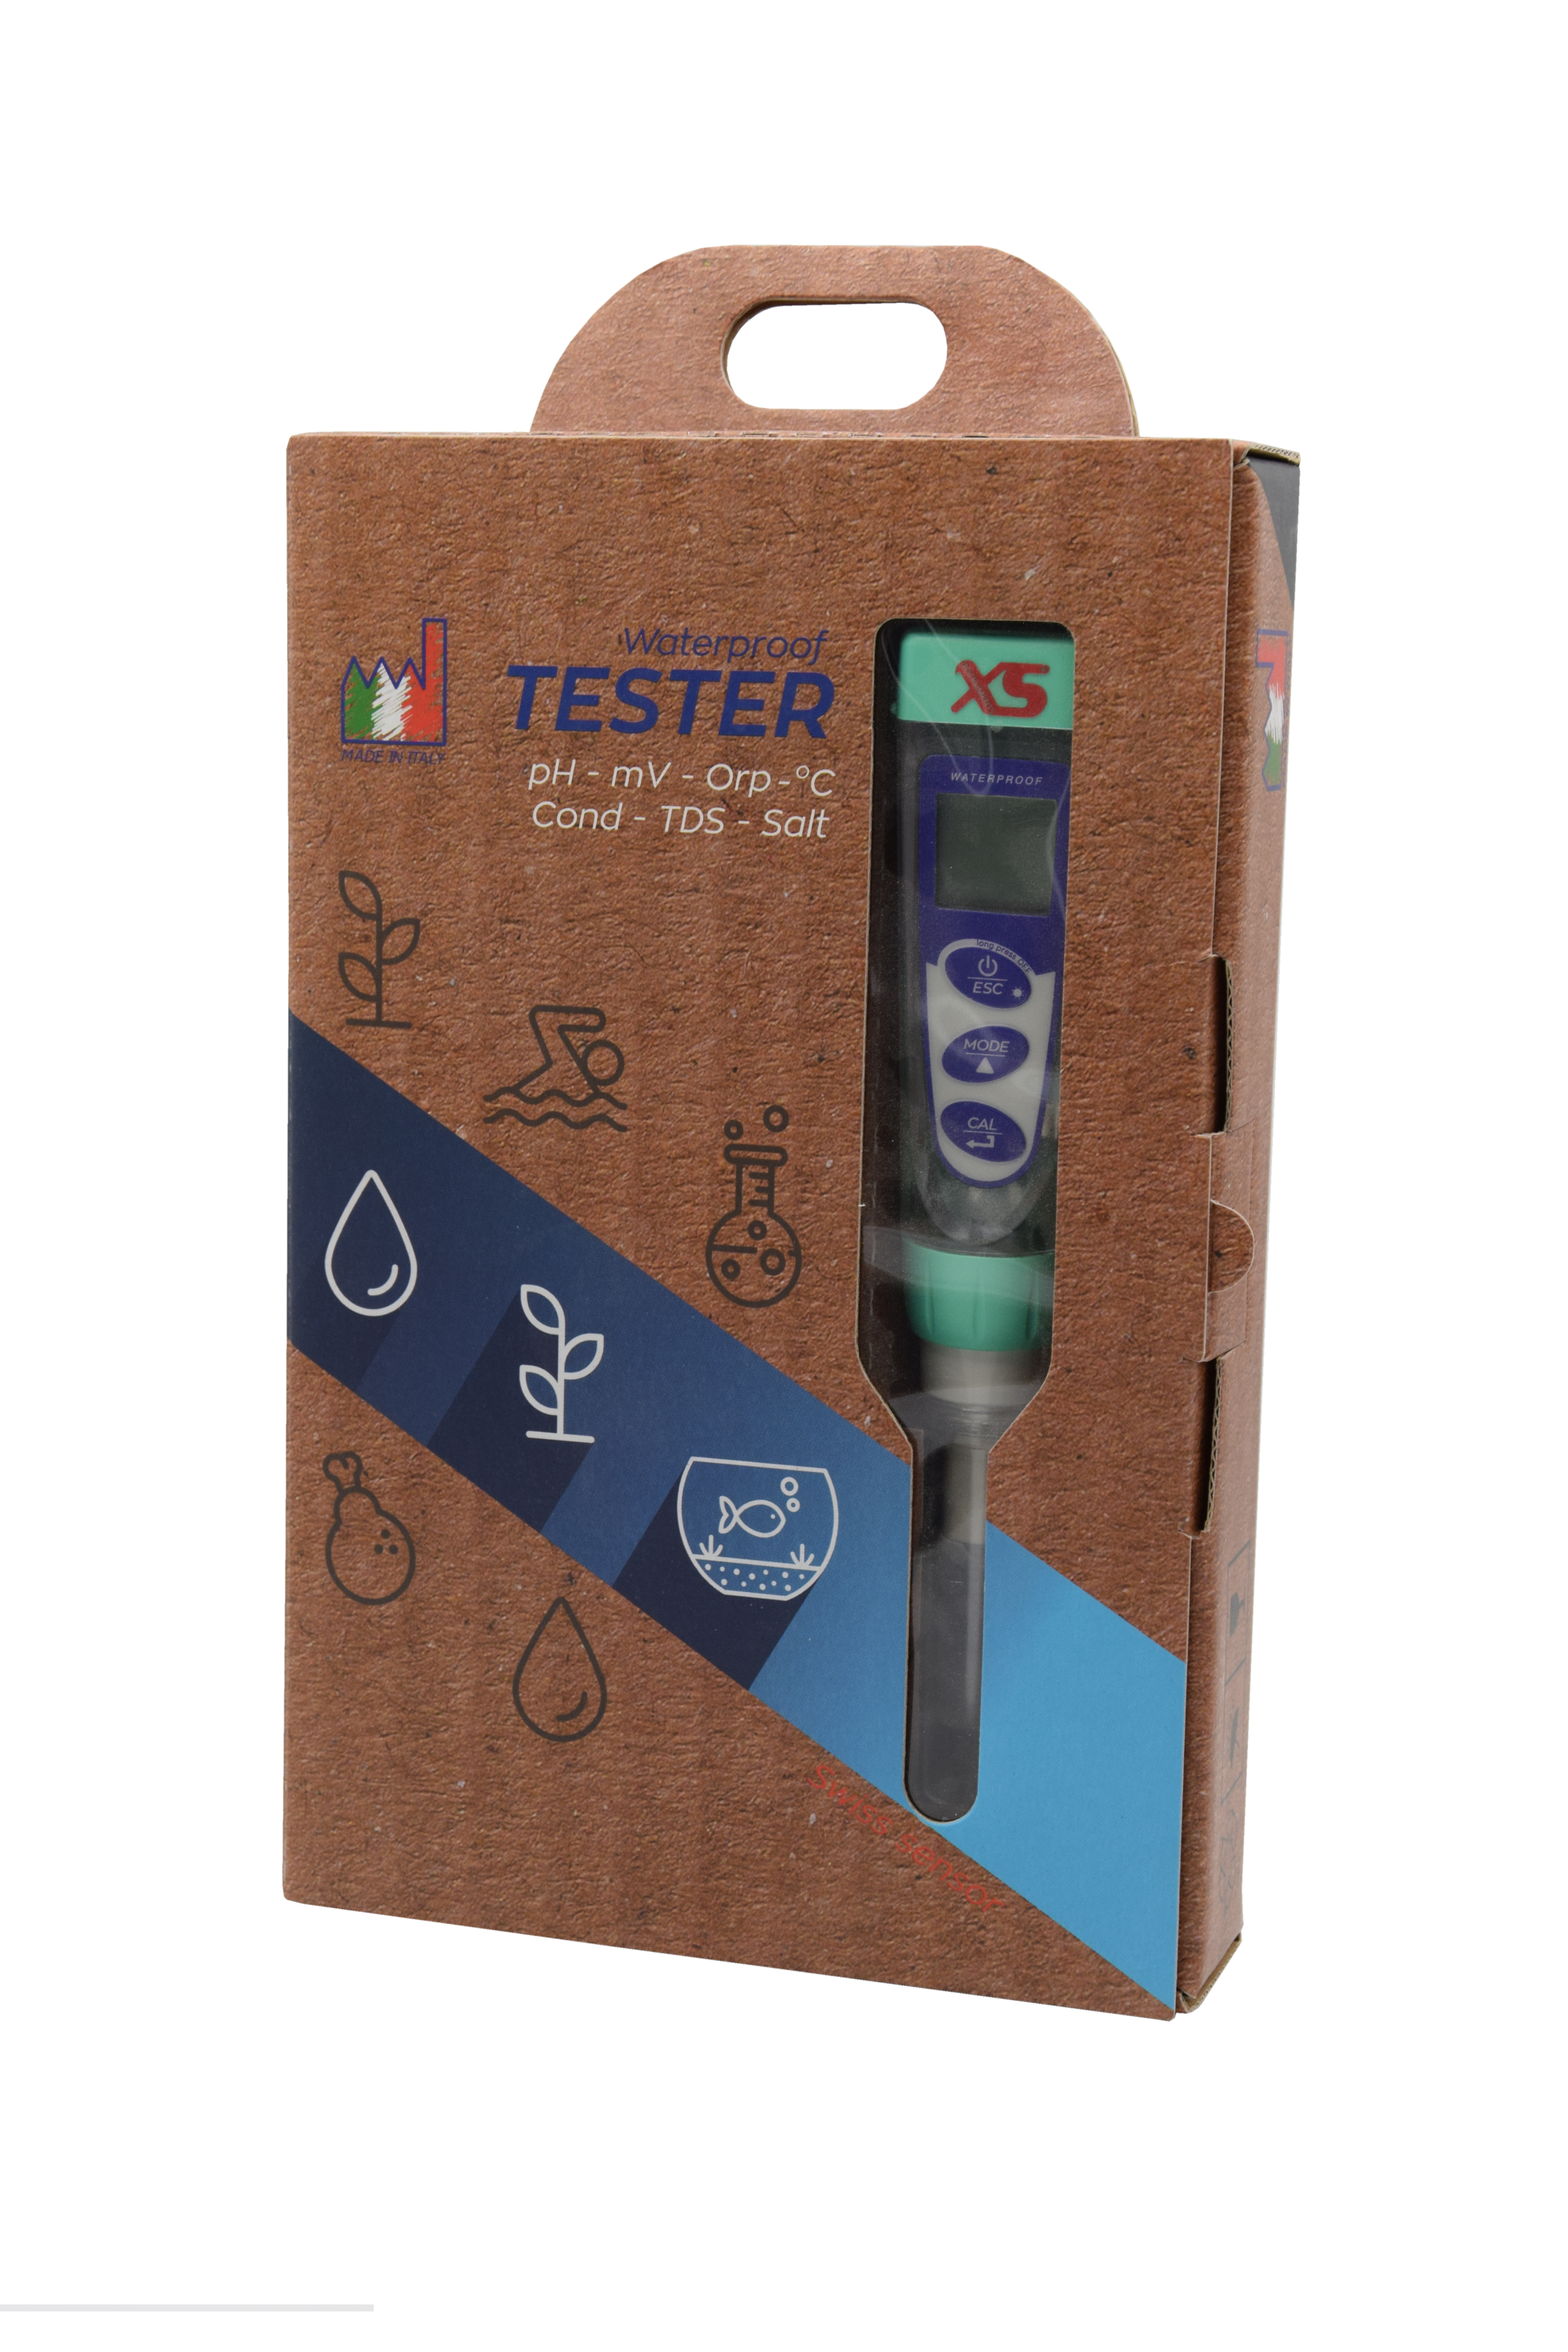 XS pX 4 Tester Kit - pH/Redox/Temperatur Pocket-Tester 